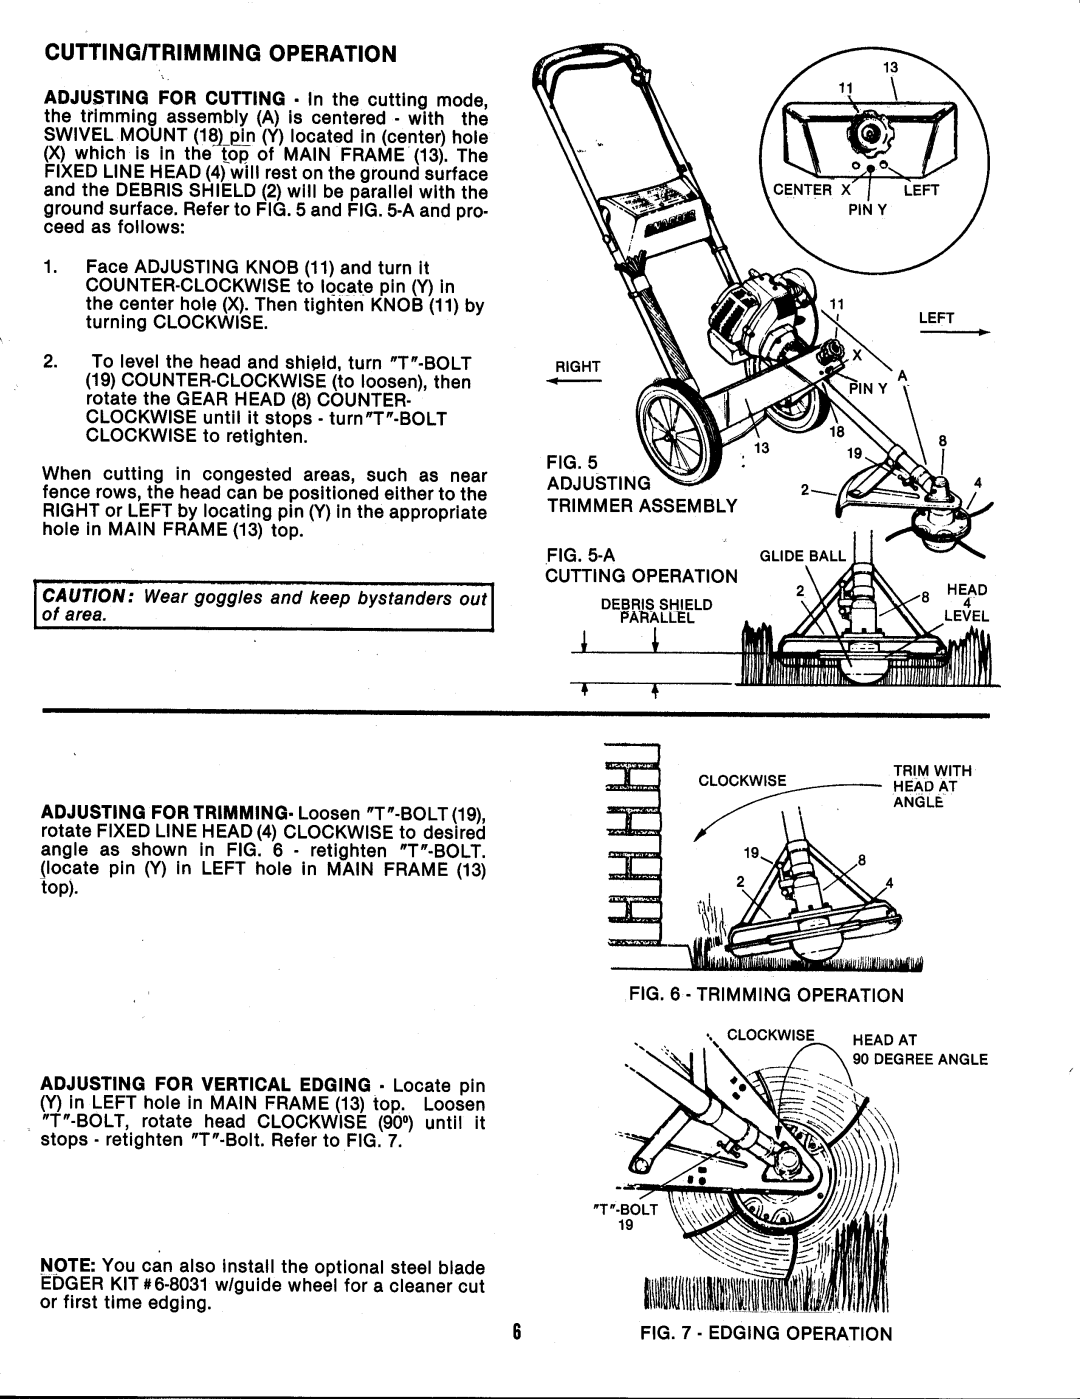 Snapper 4150 RT manual 